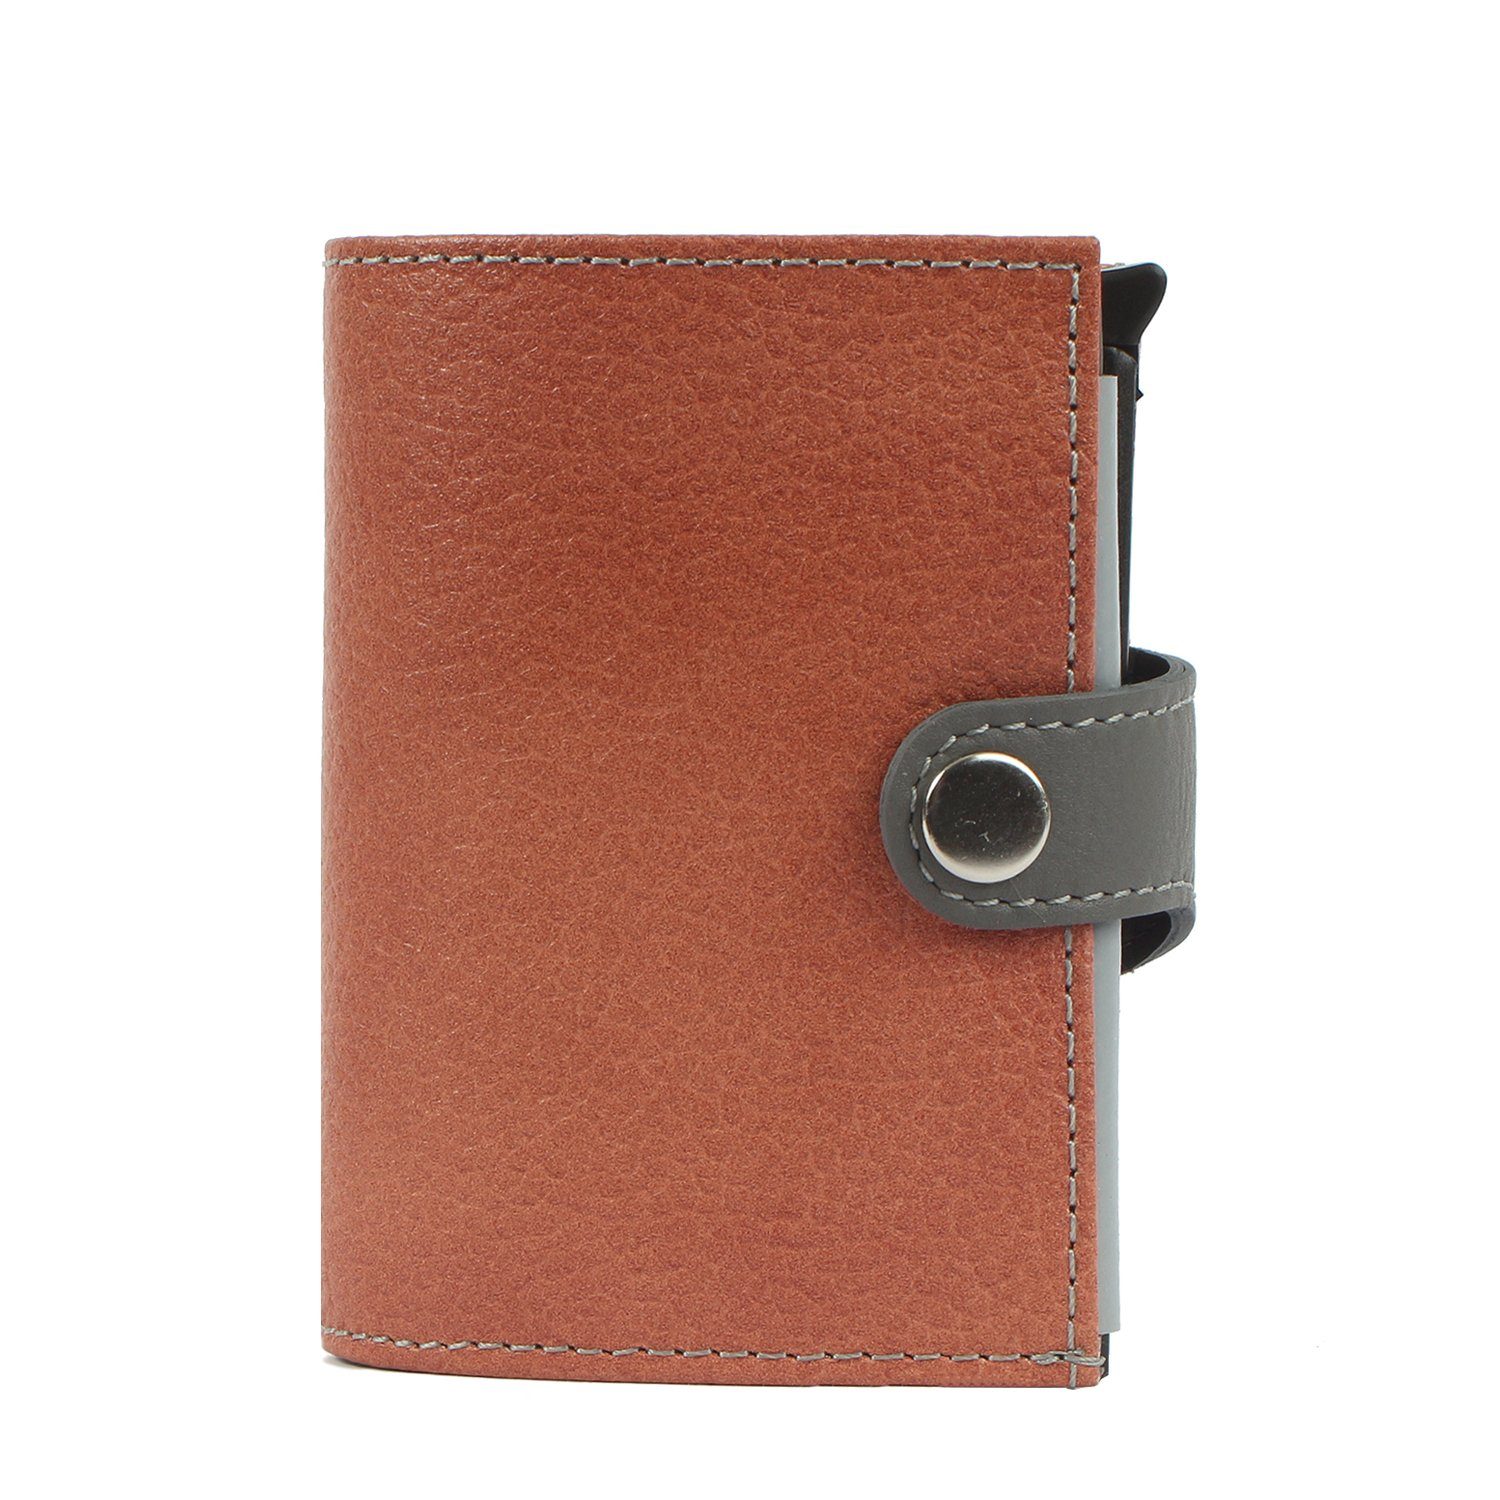 Margelisch Mini Geldbörse noonyu double leather, RFID Kreditkartenbörse aus Upcycling Leder salmon